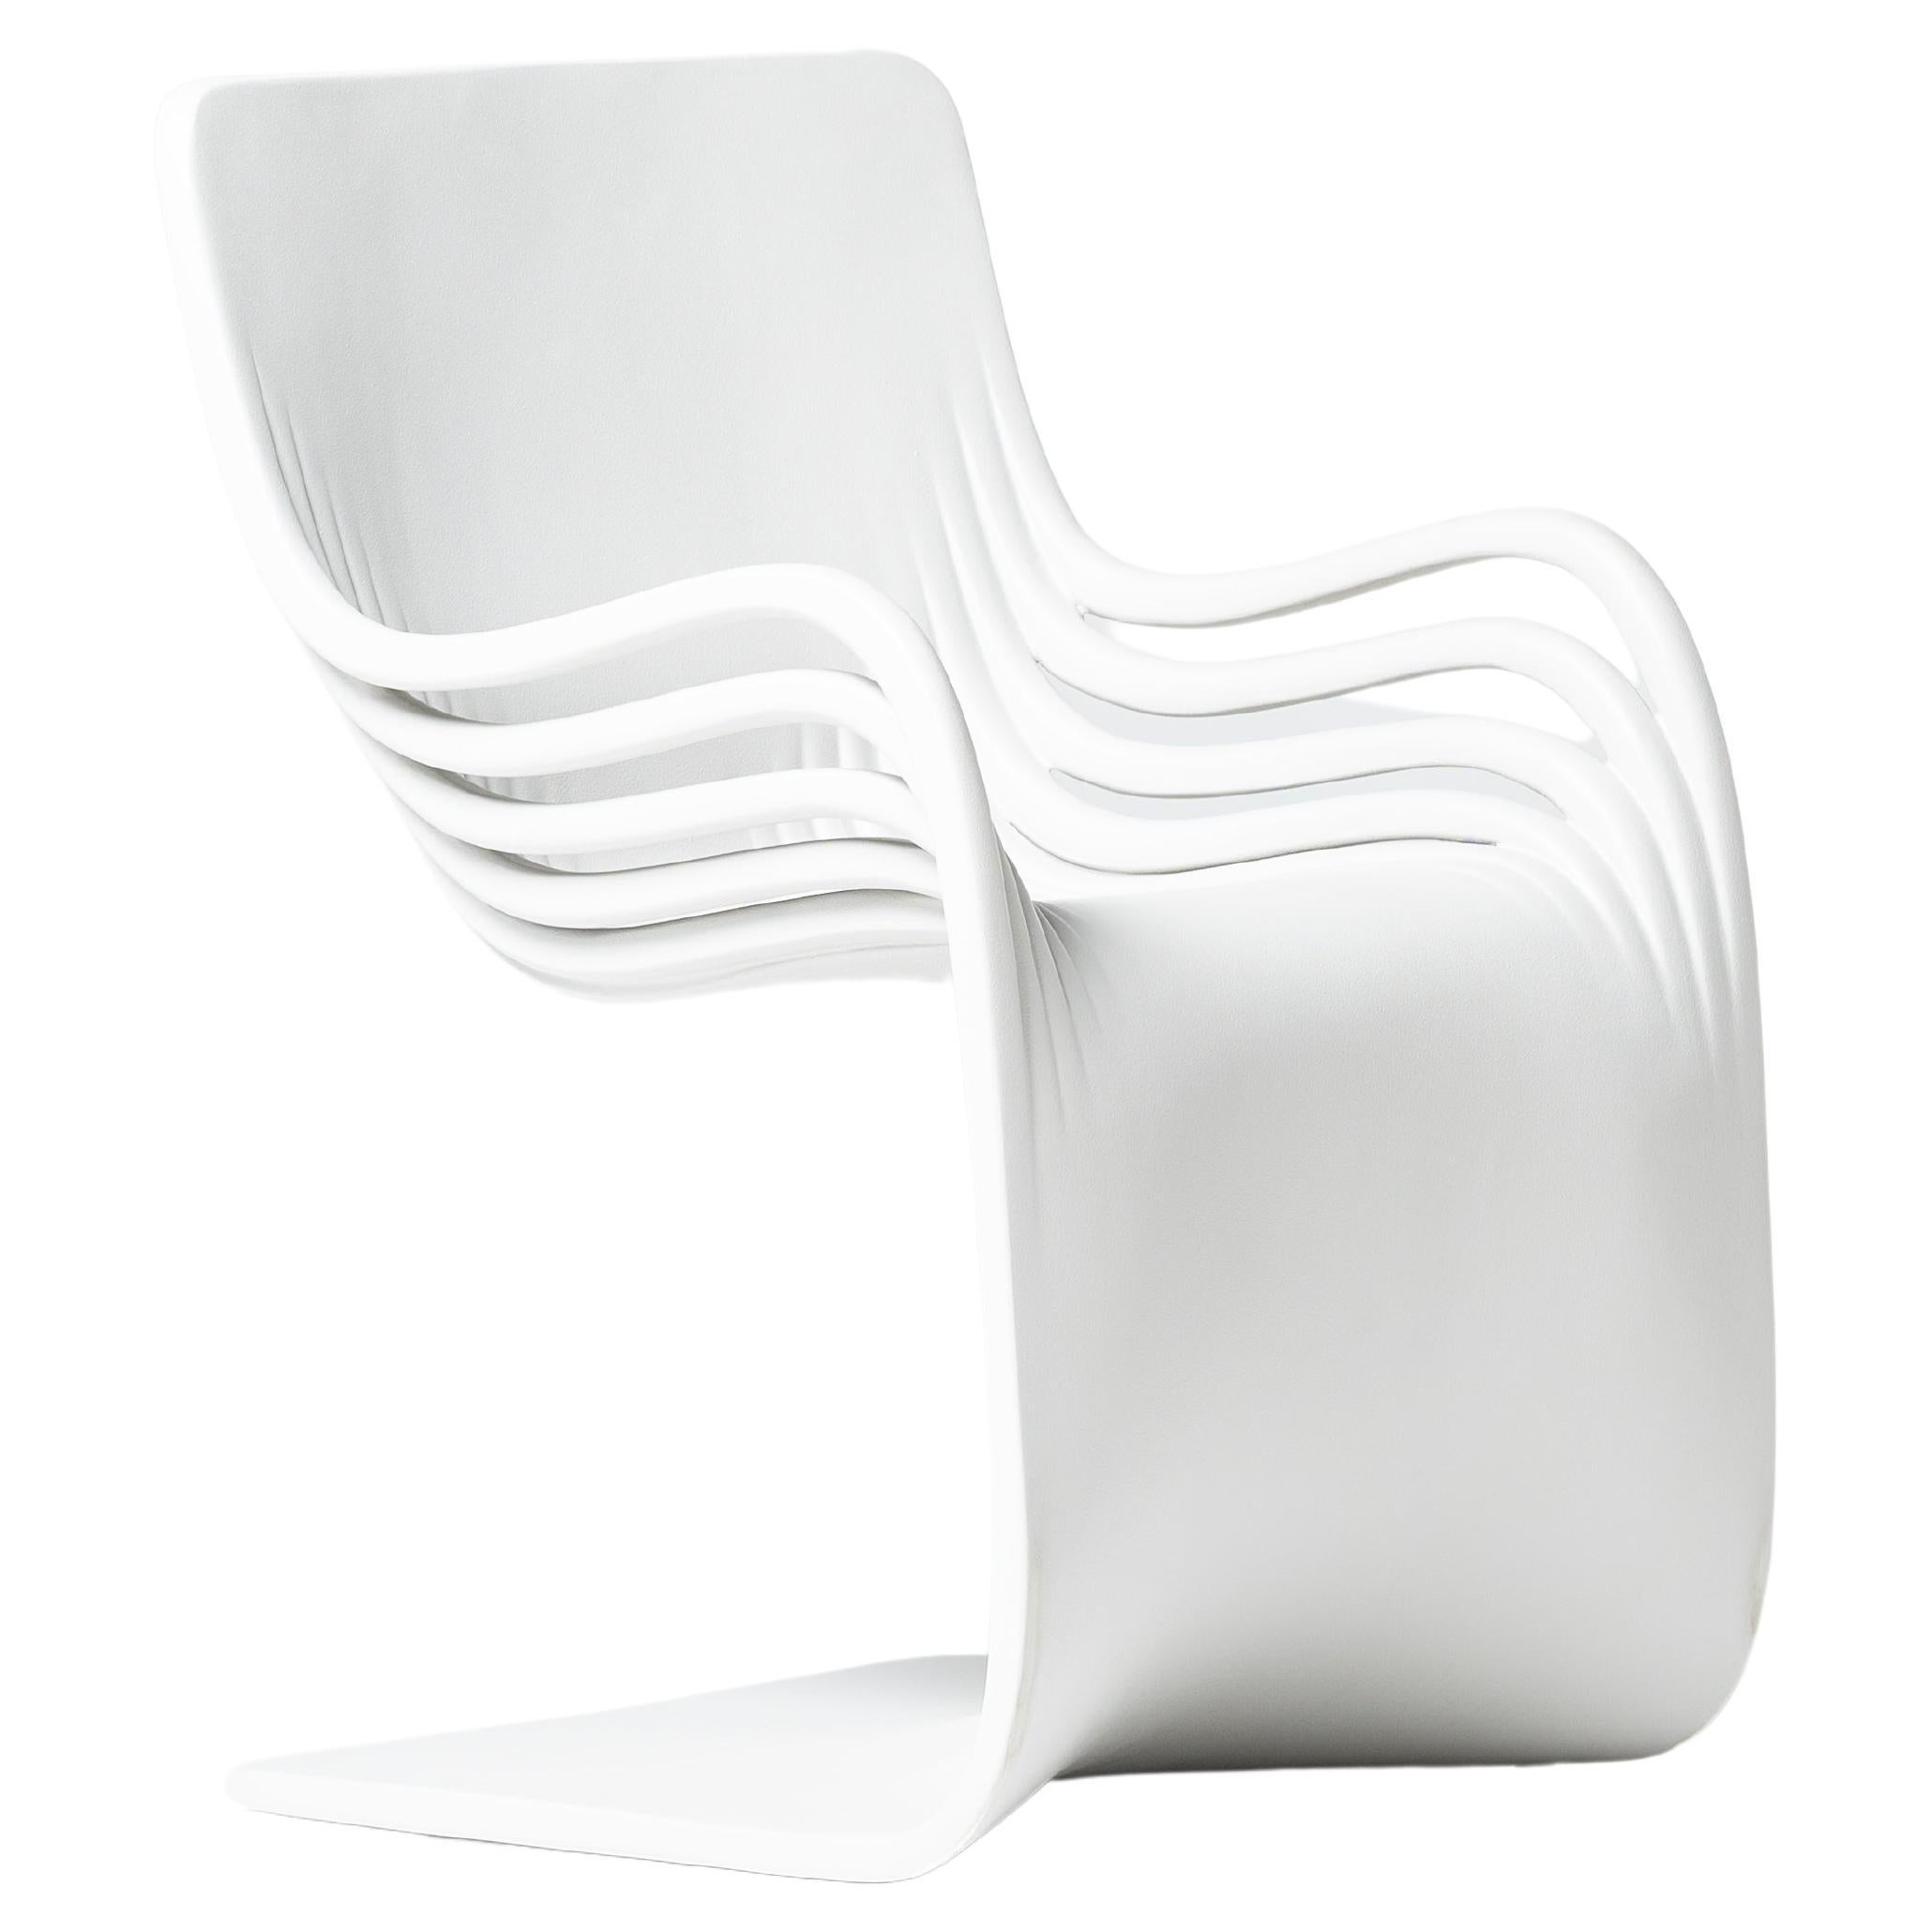  Pipo Fiber by Piegatto, a a Sculptural Contemporary Chair For Sale